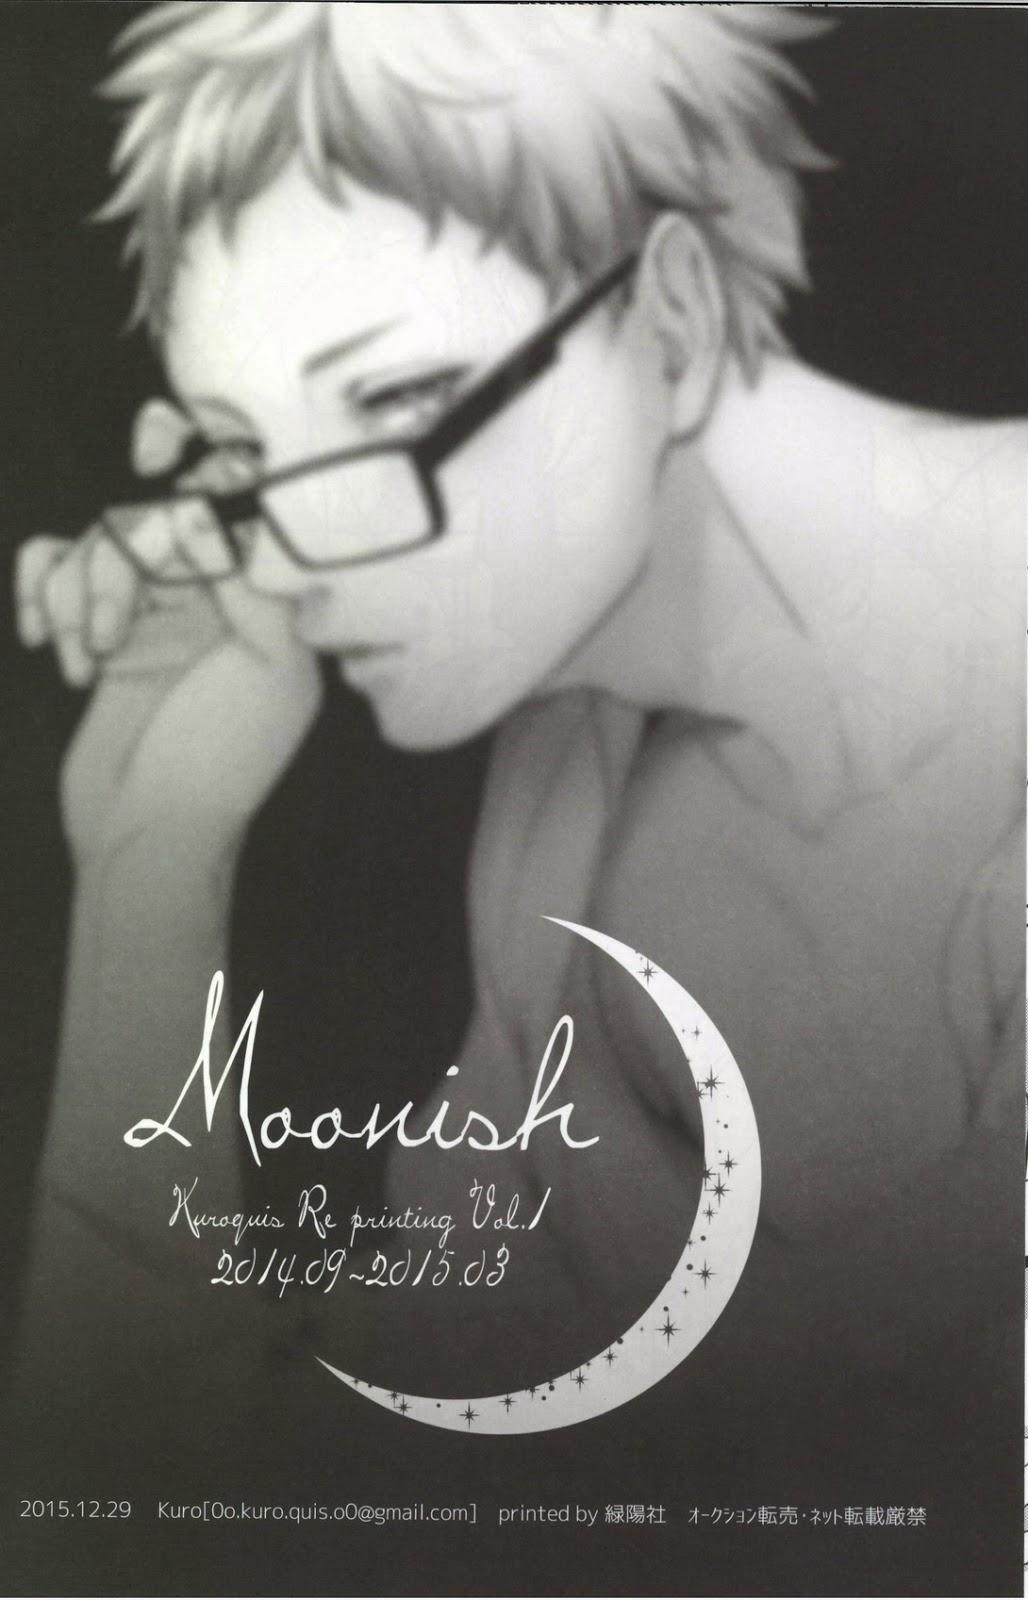 Moonish 25